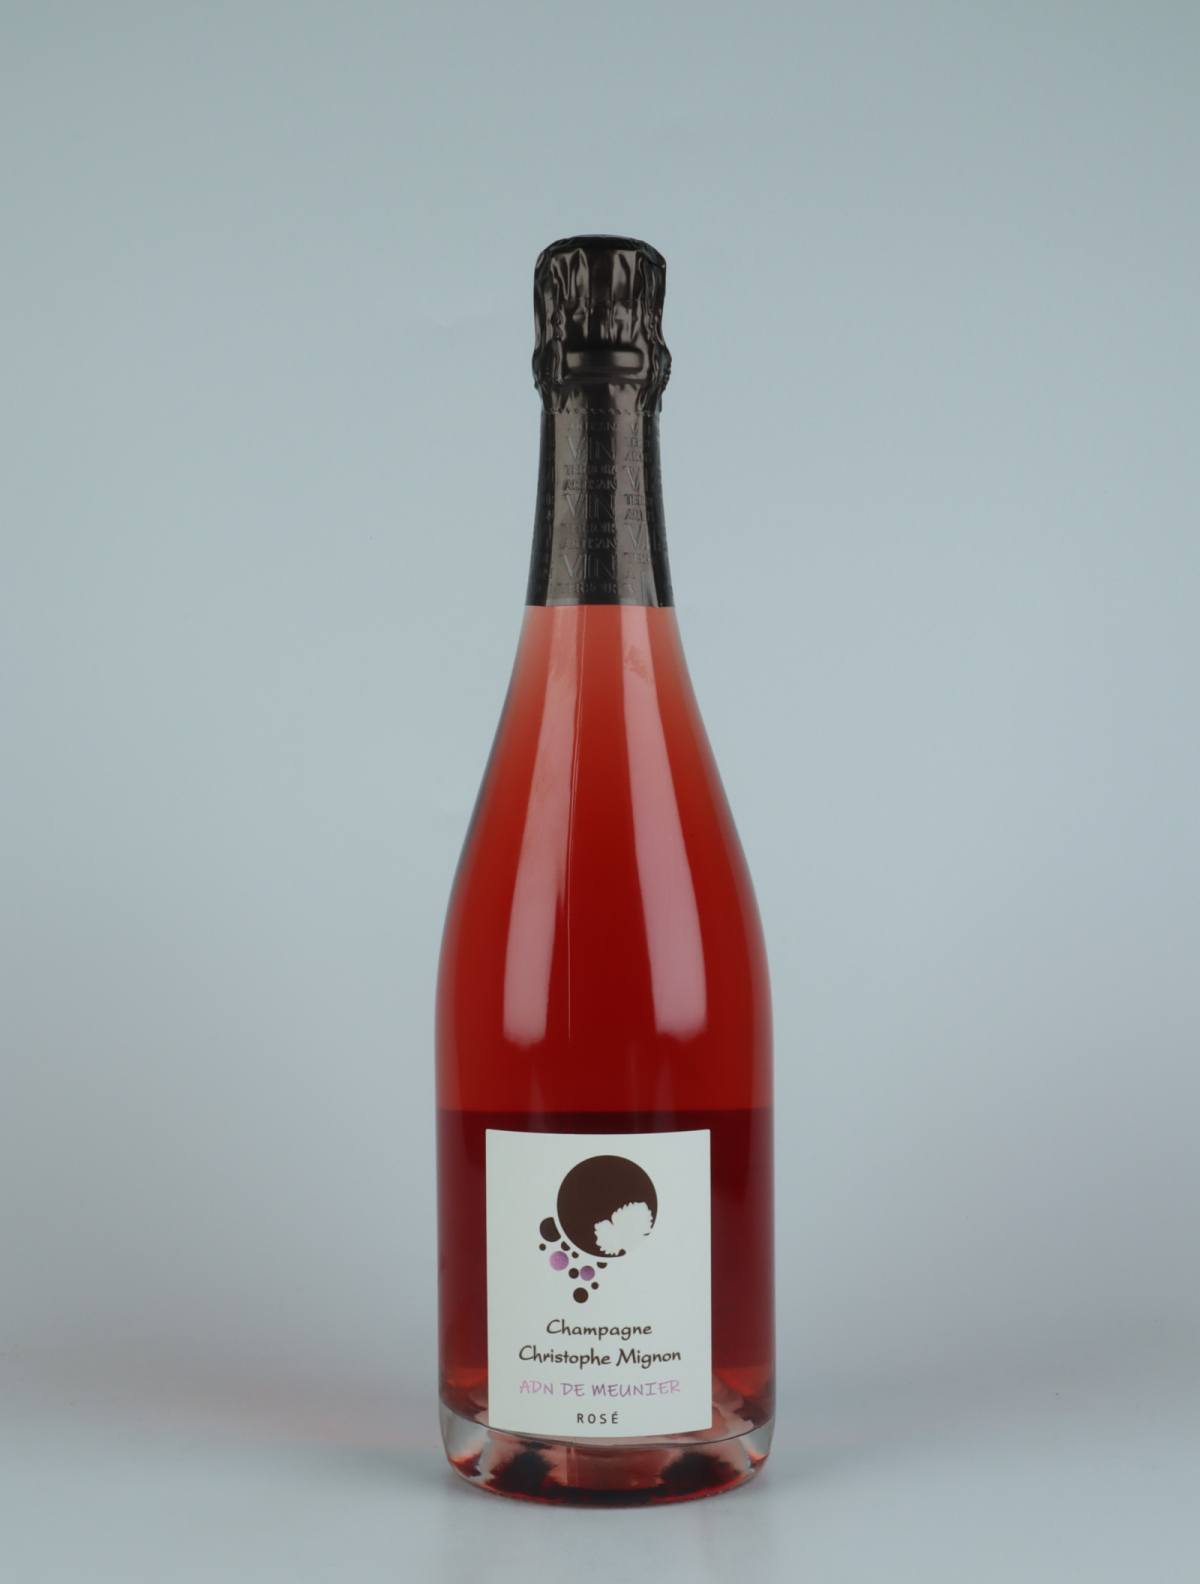 A bottle N.V. ADN de Meunier Rose Extra Brut Sparkling from Christophe Mignon, Champagne in France